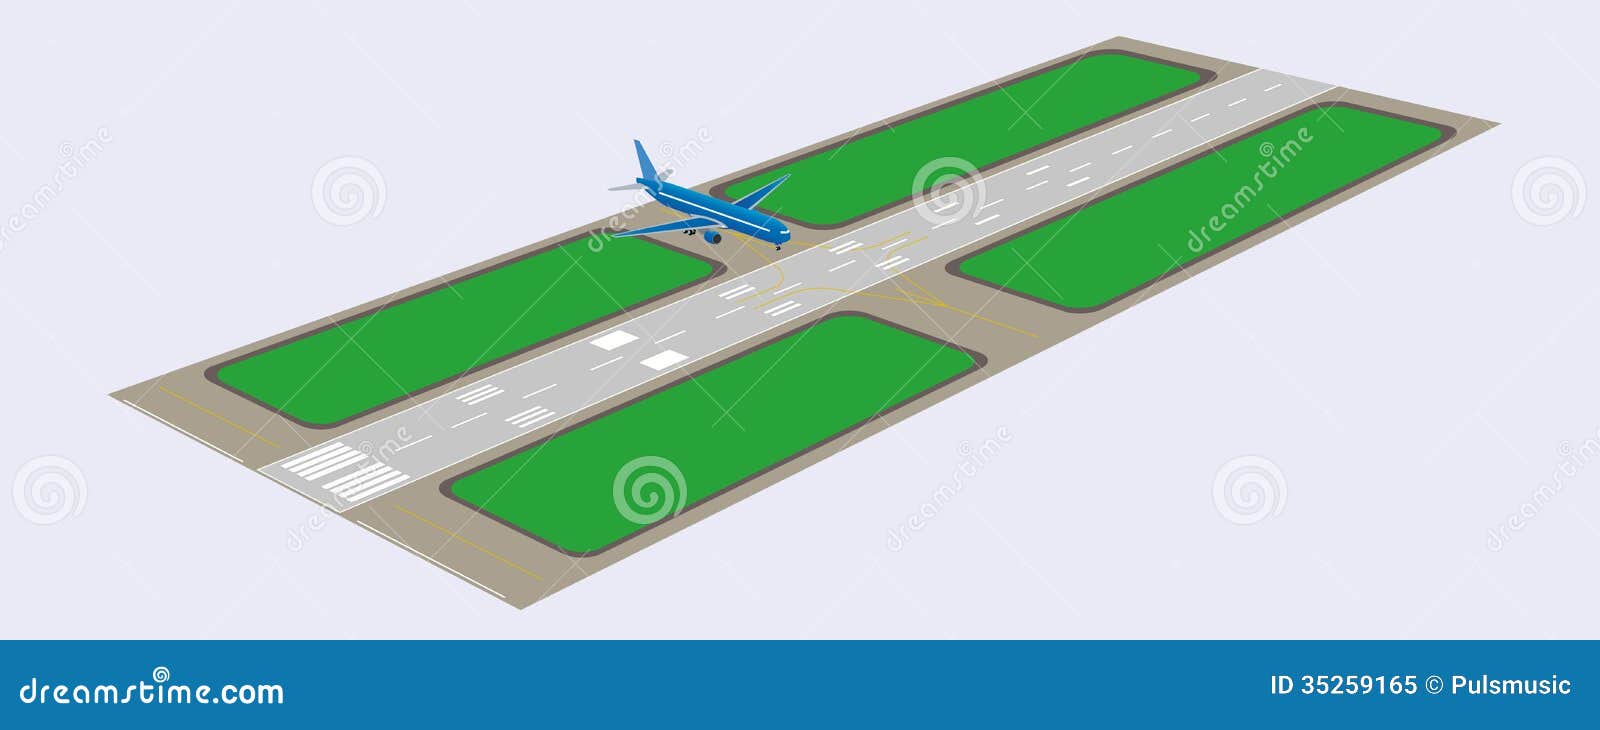 clipart airport runway - photo #4